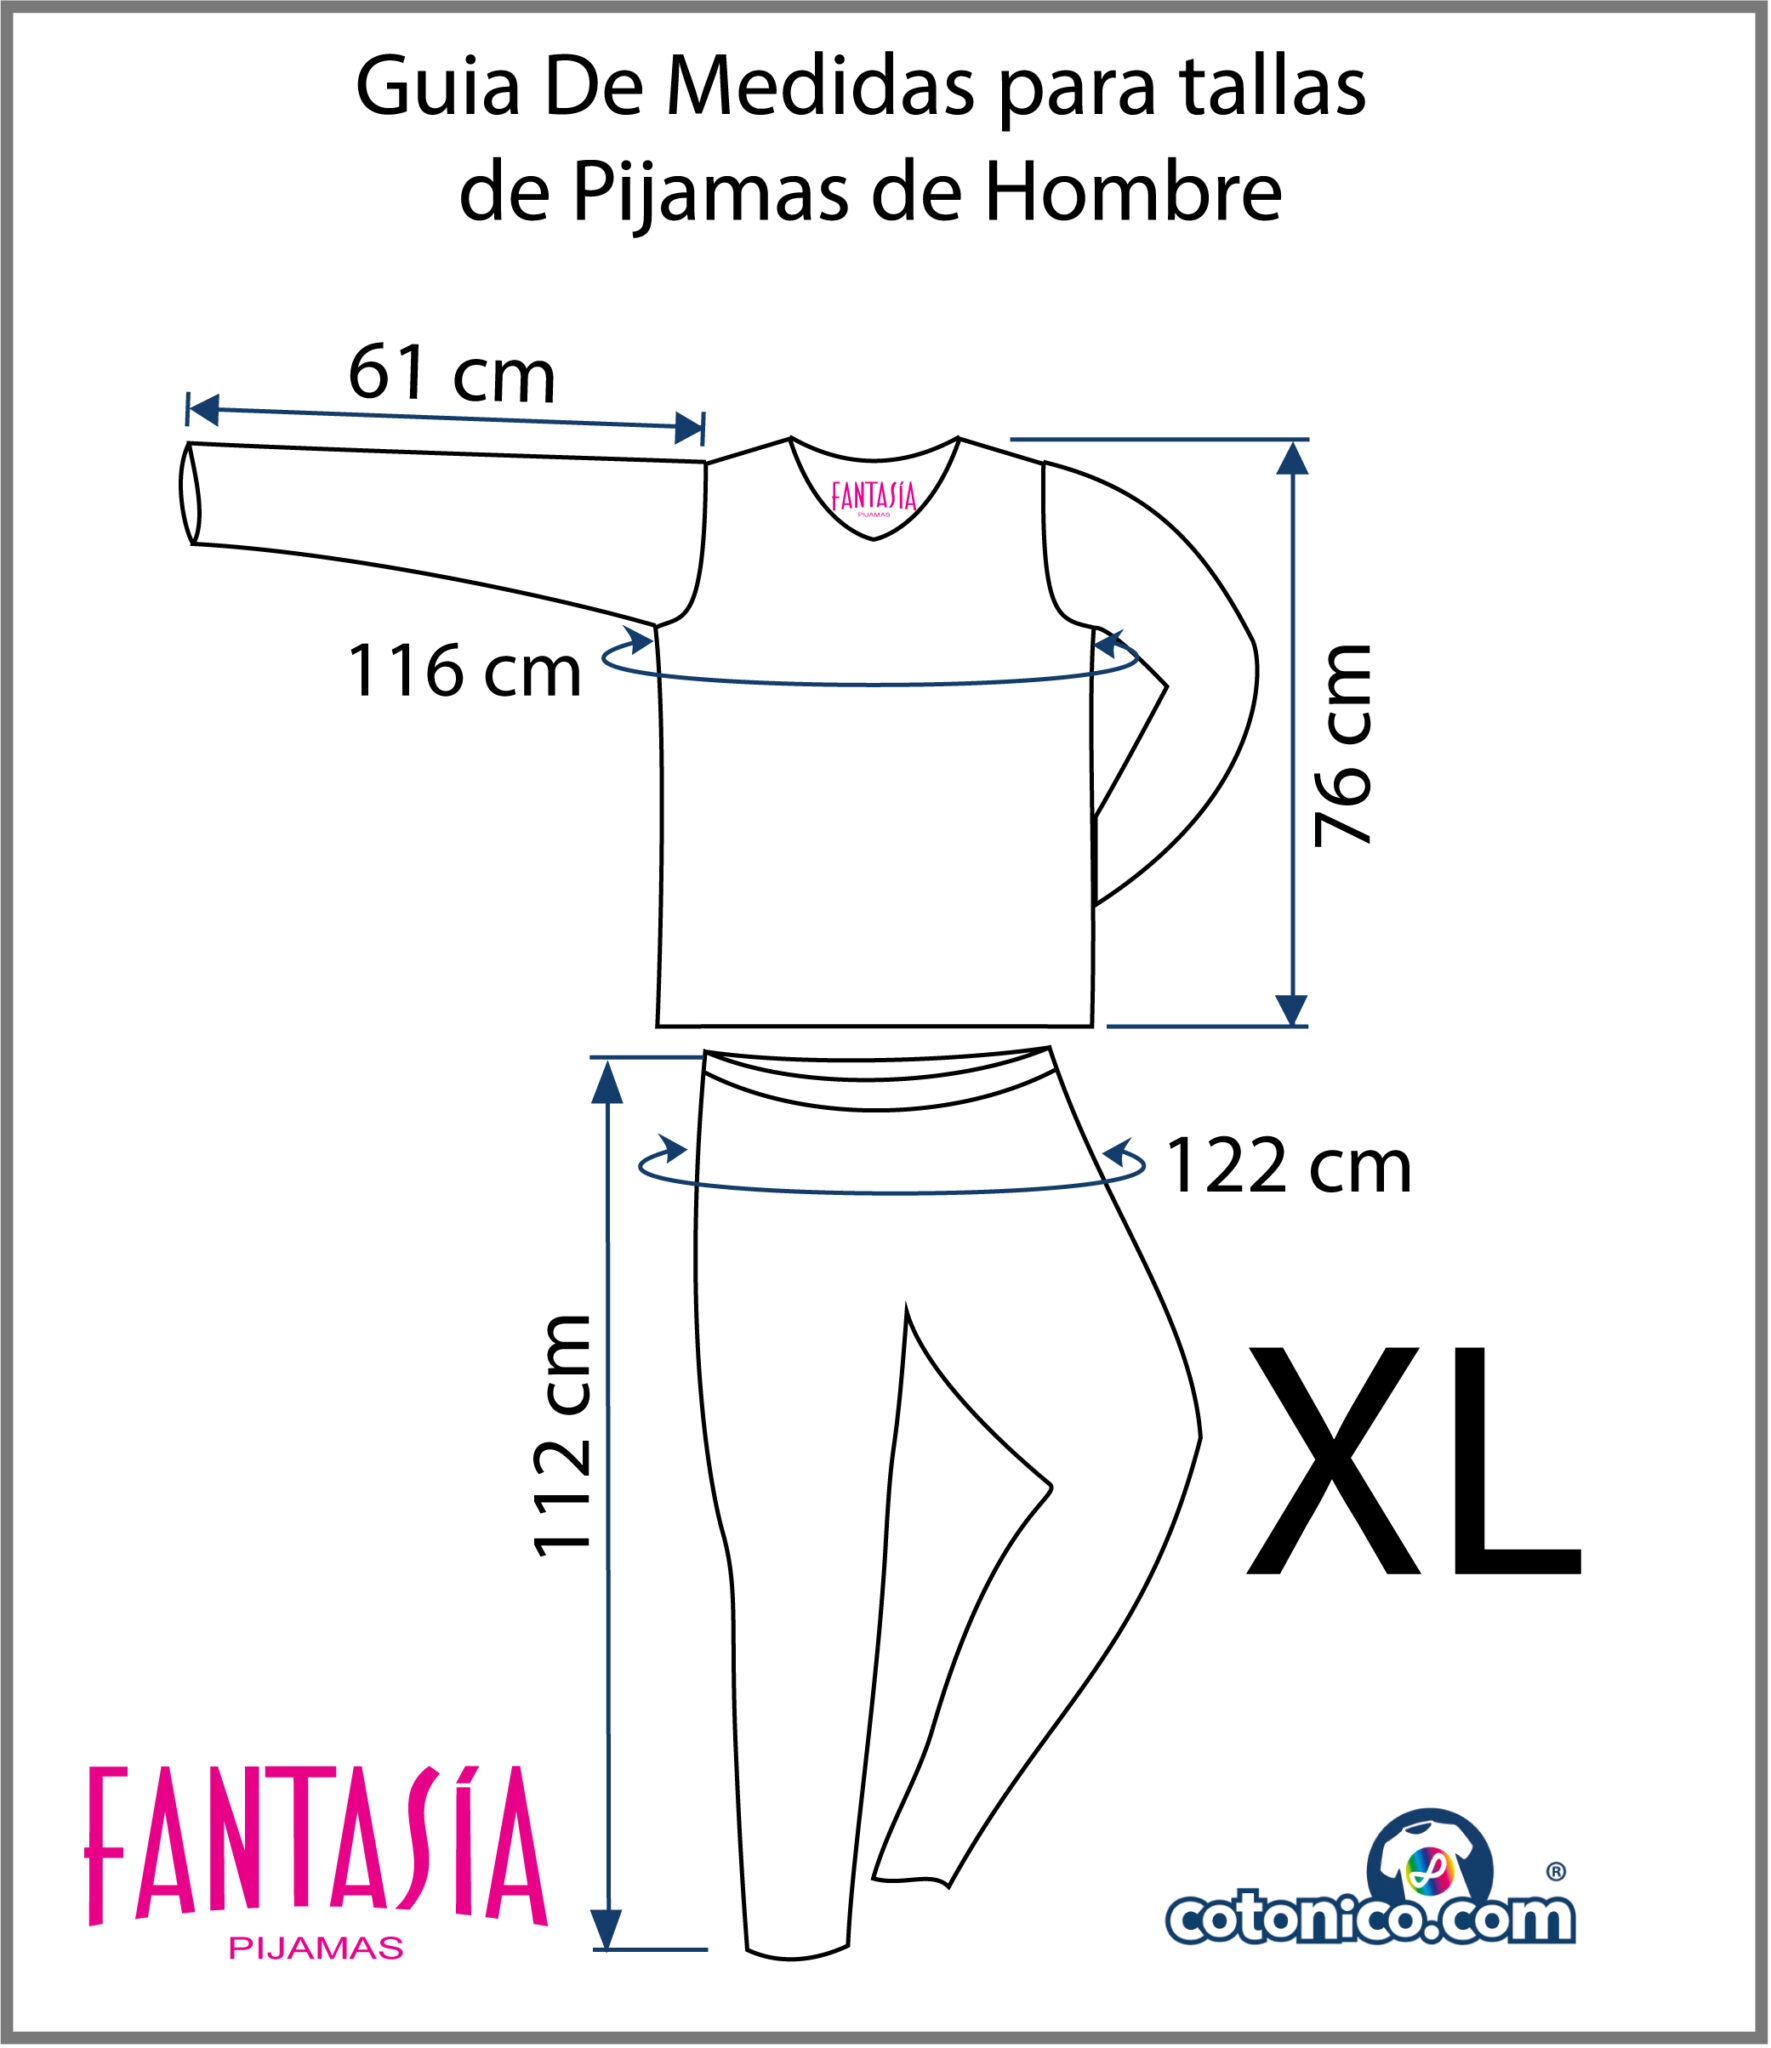 Guia-De-Tallas-Pijamas-De-Hombre-XL